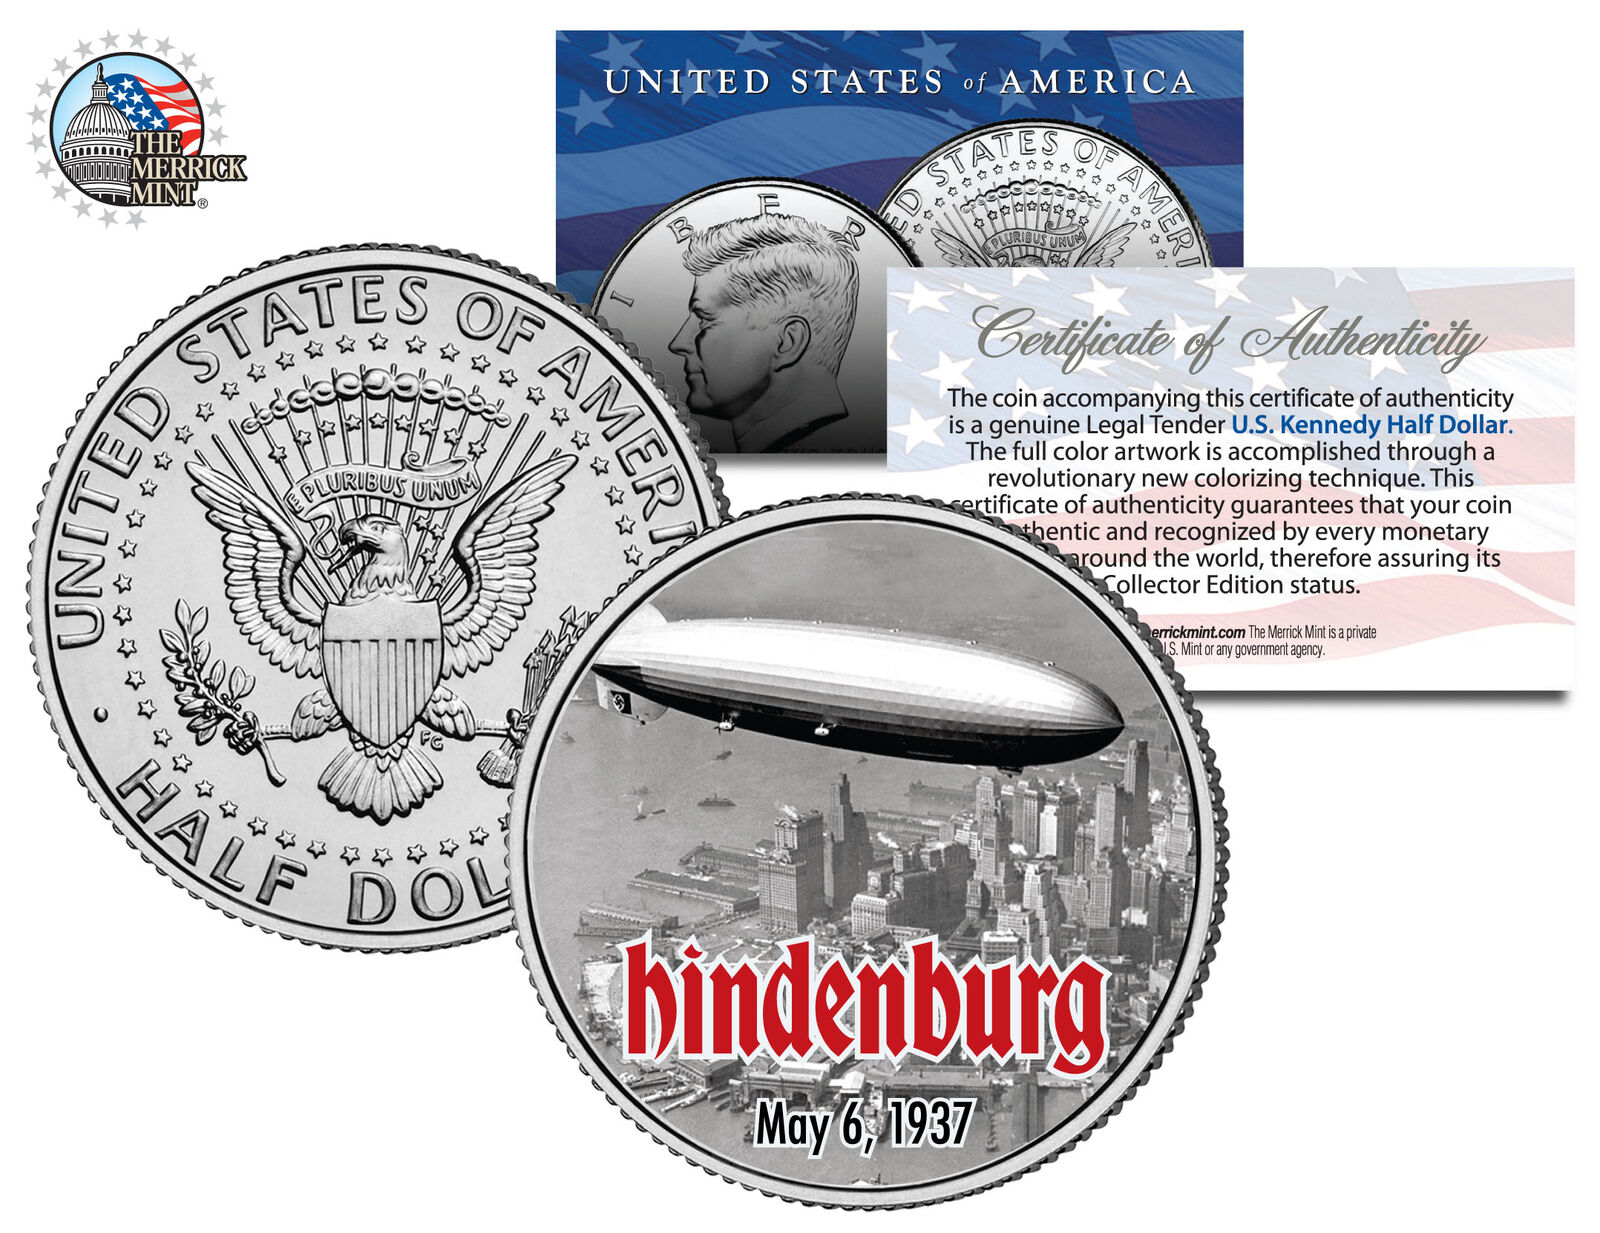 HINDENBURG LZ-129 AIRSHIP * Flying Over NYC * Kennedy Half Dollar U.S. Coin